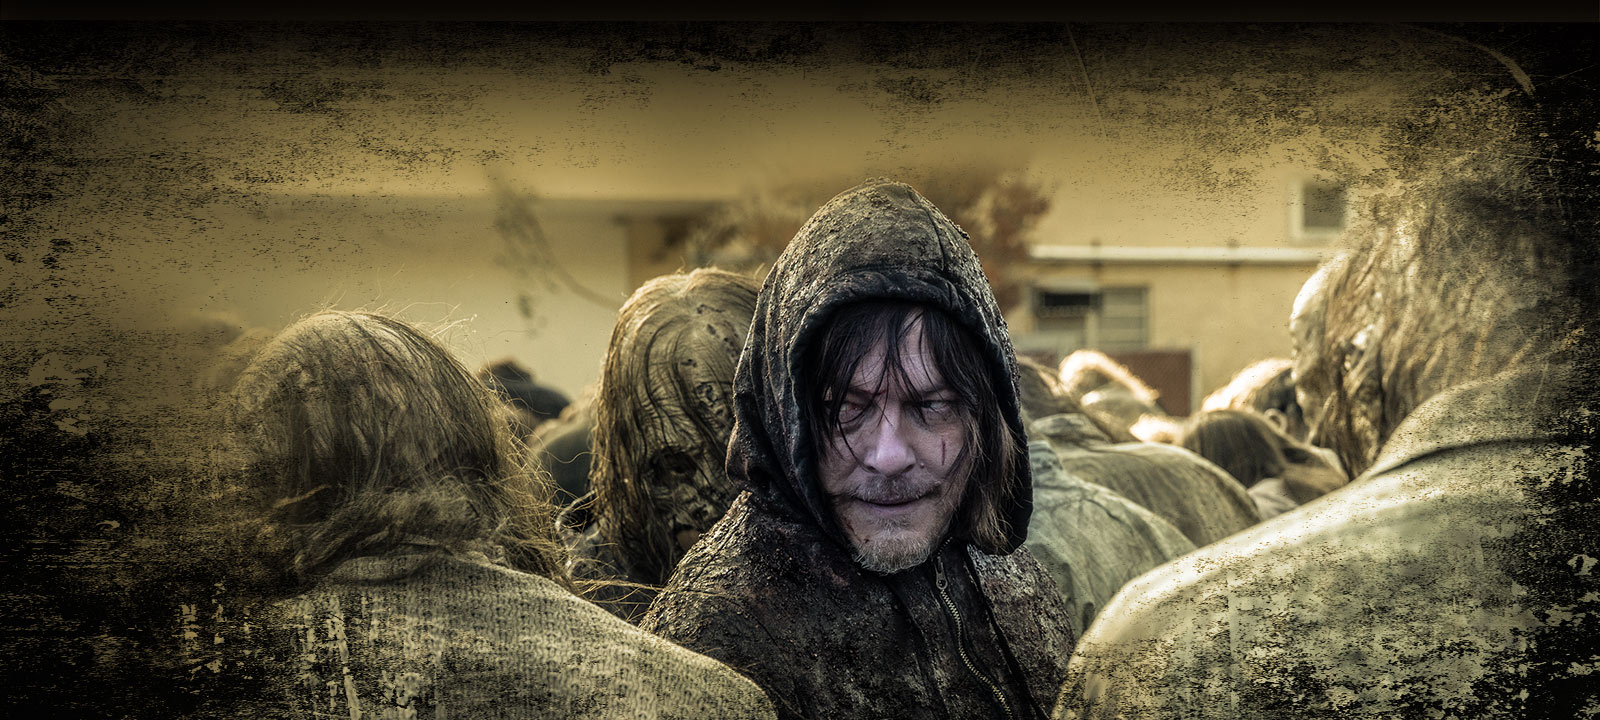 Watch The Walking Dead Season 10 - New Episodes from AMC